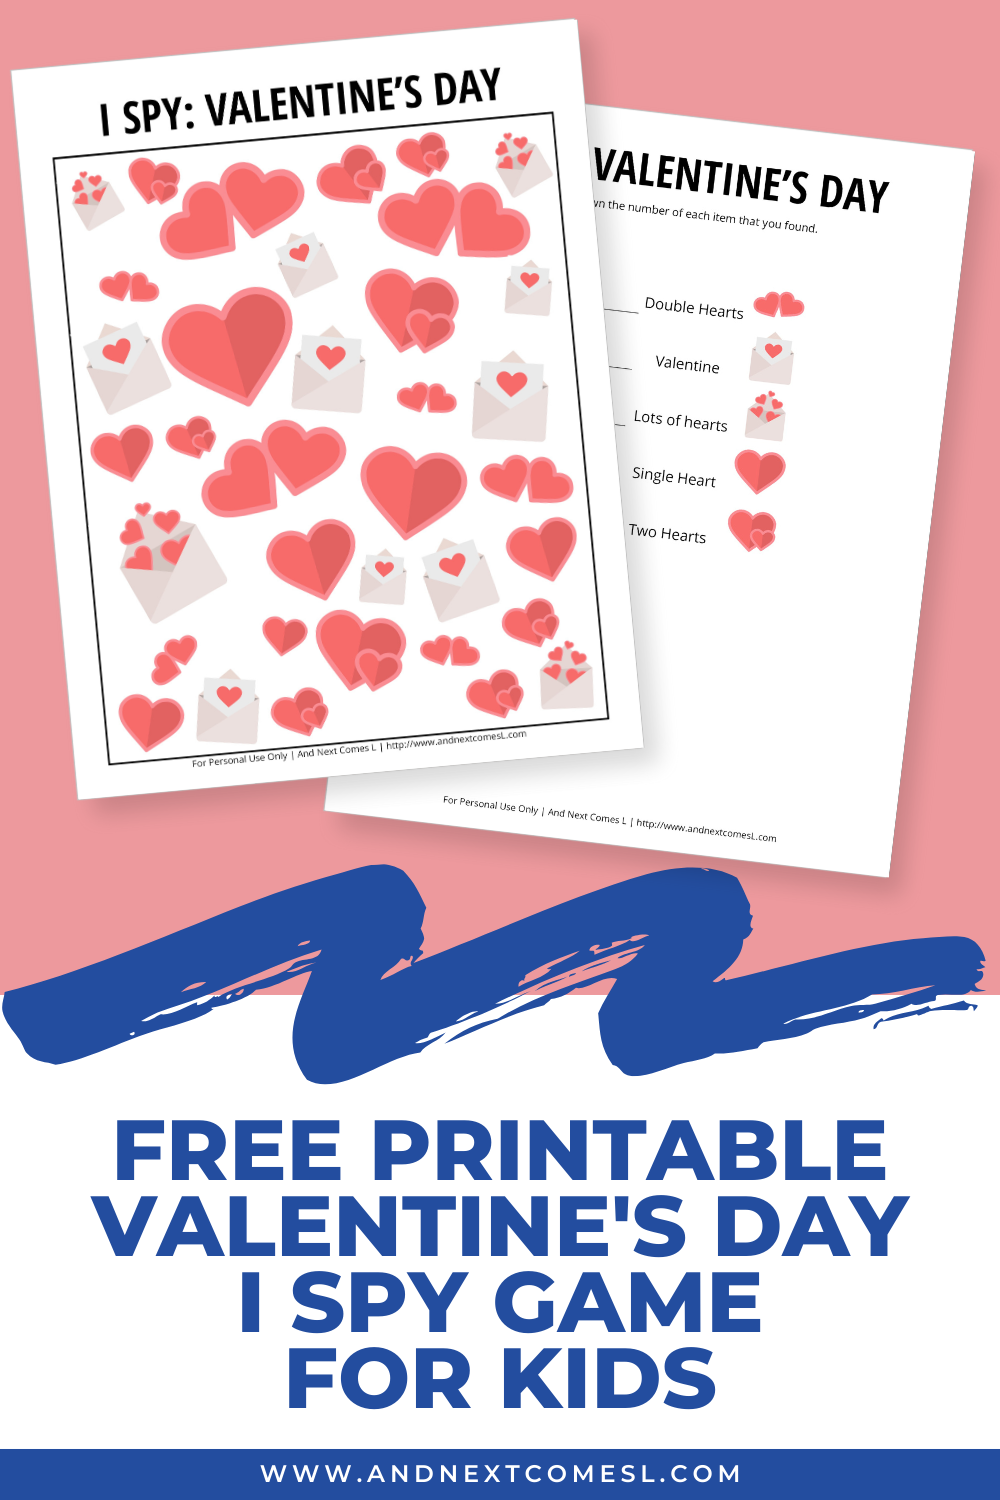 Free printable Valentine's Day I spy game for kids